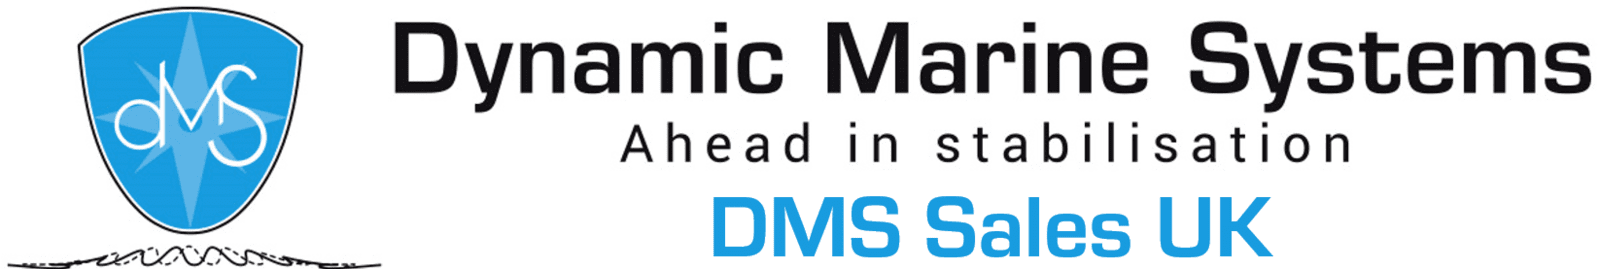 DMS Sales UK